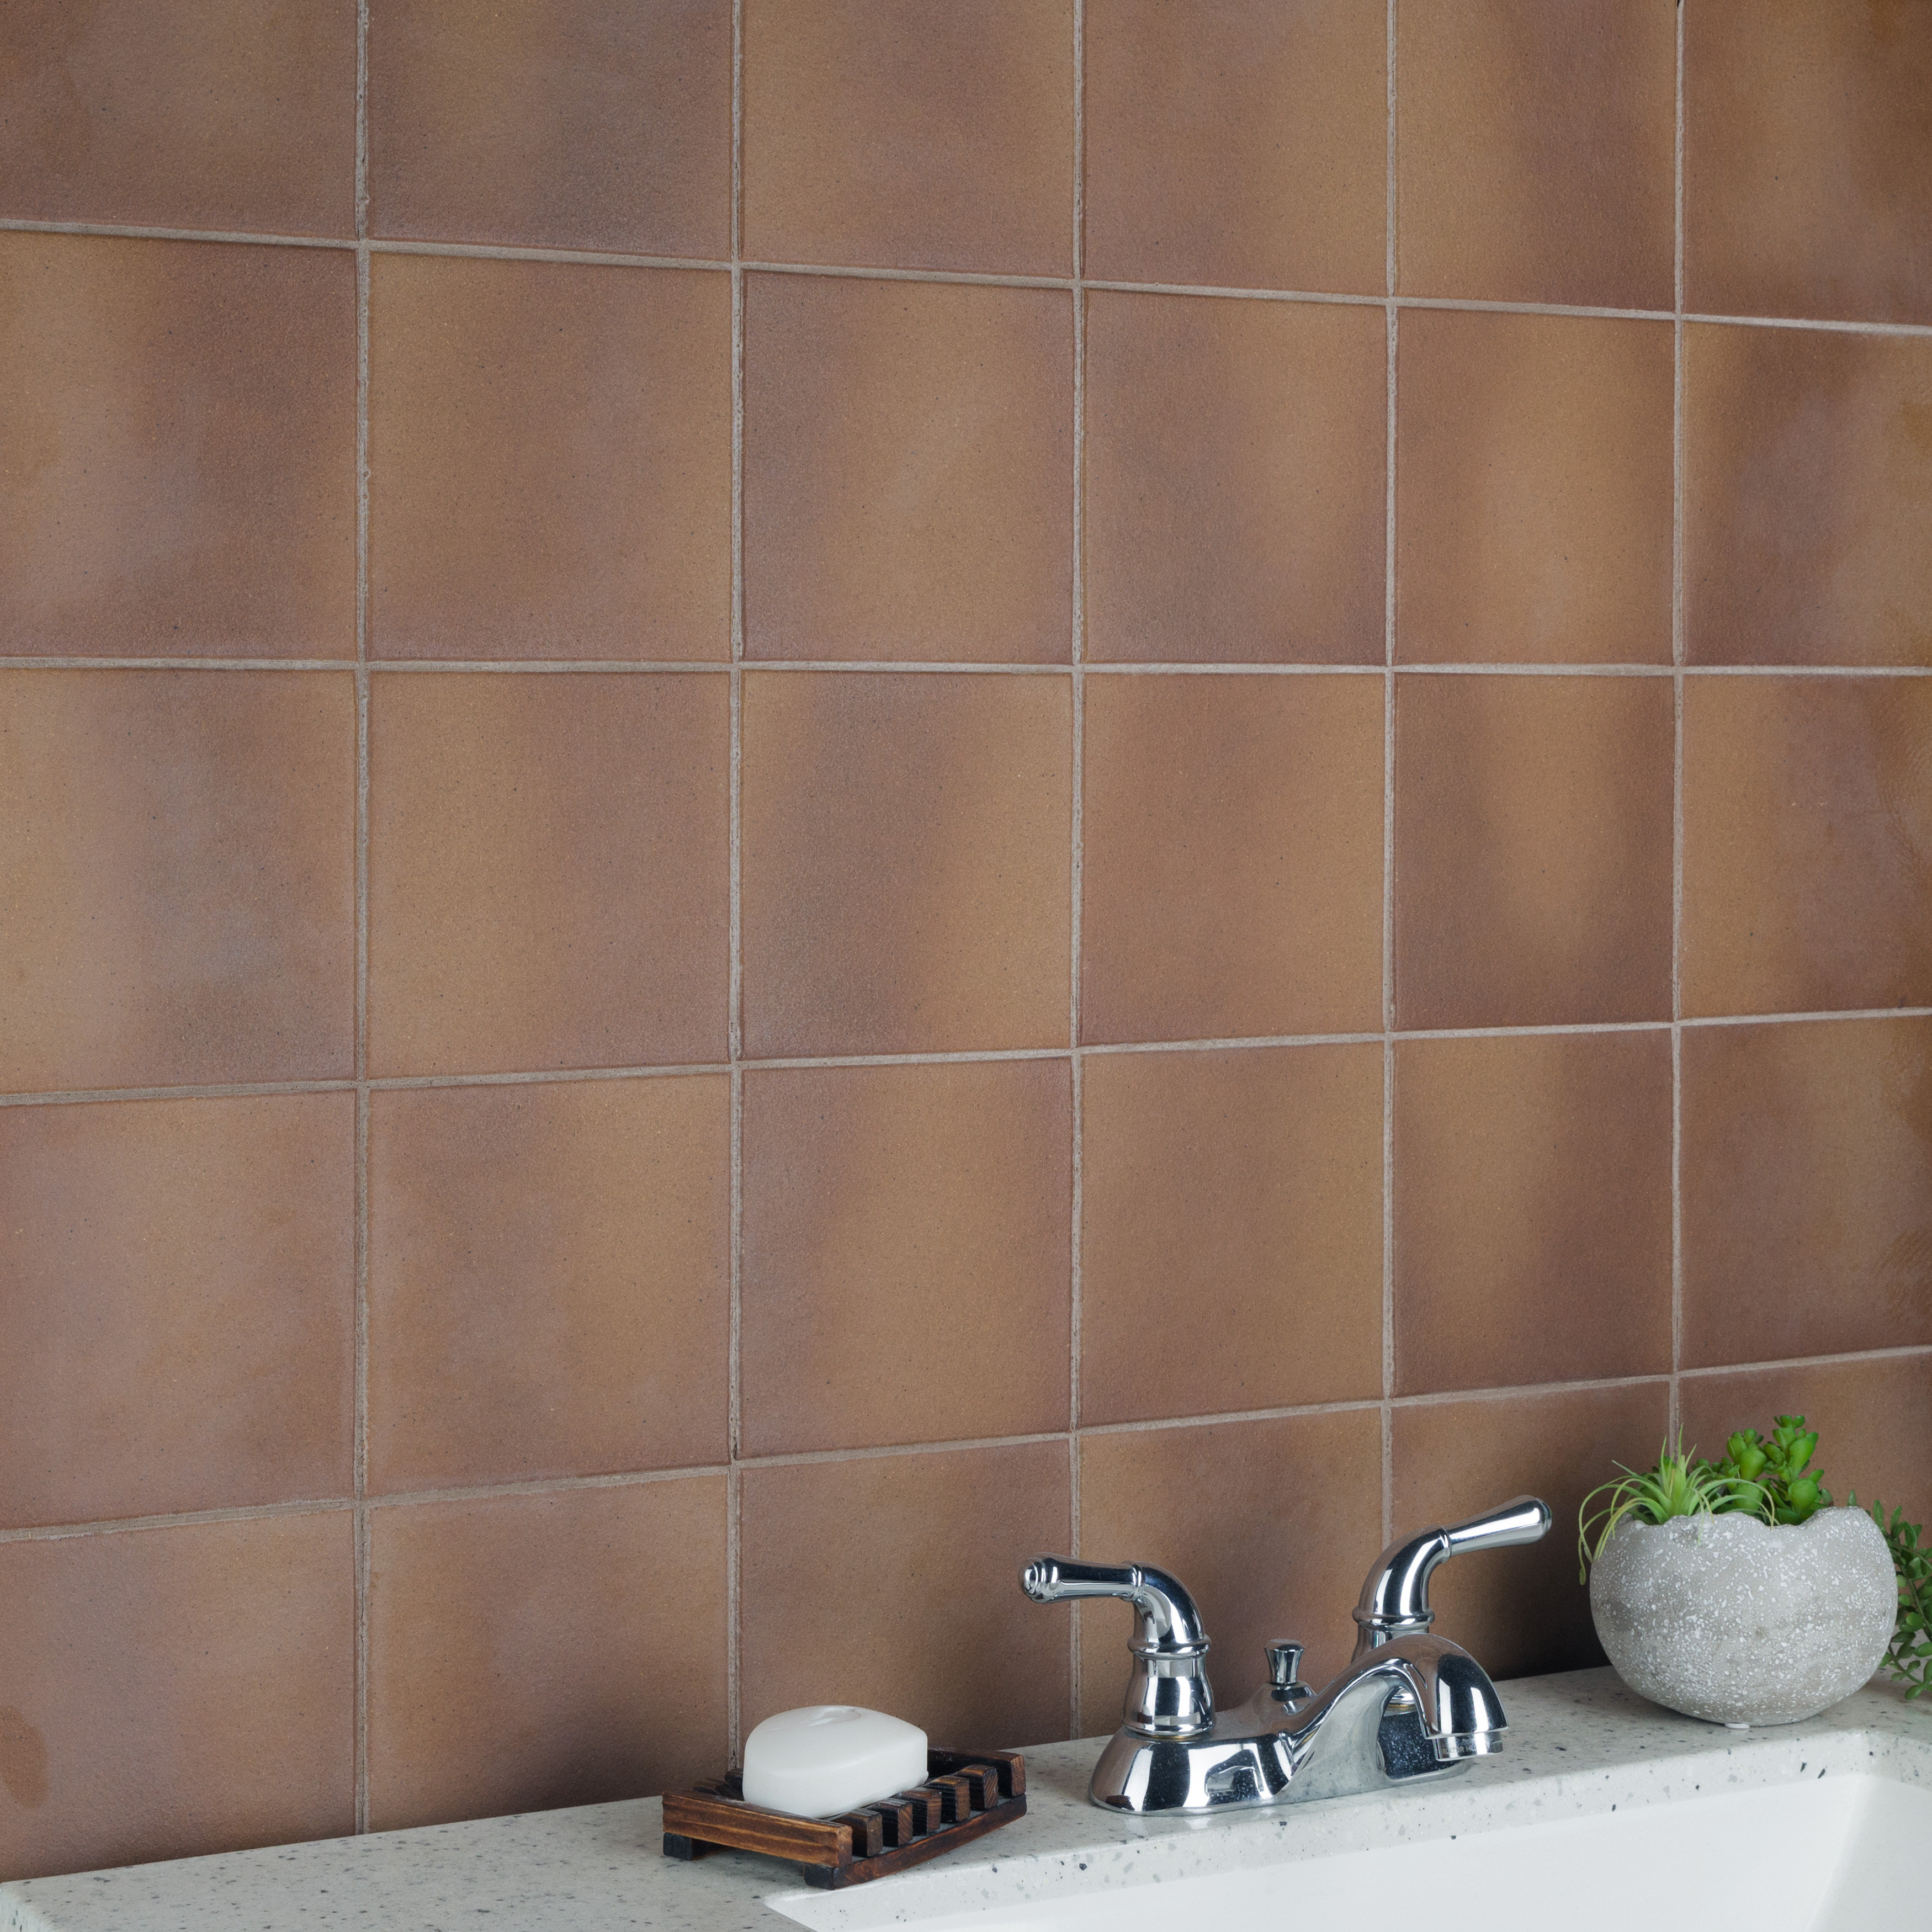 Merola Tile Quarry 6 x 6 Ceramic Wall & Floor Klinker Tile in